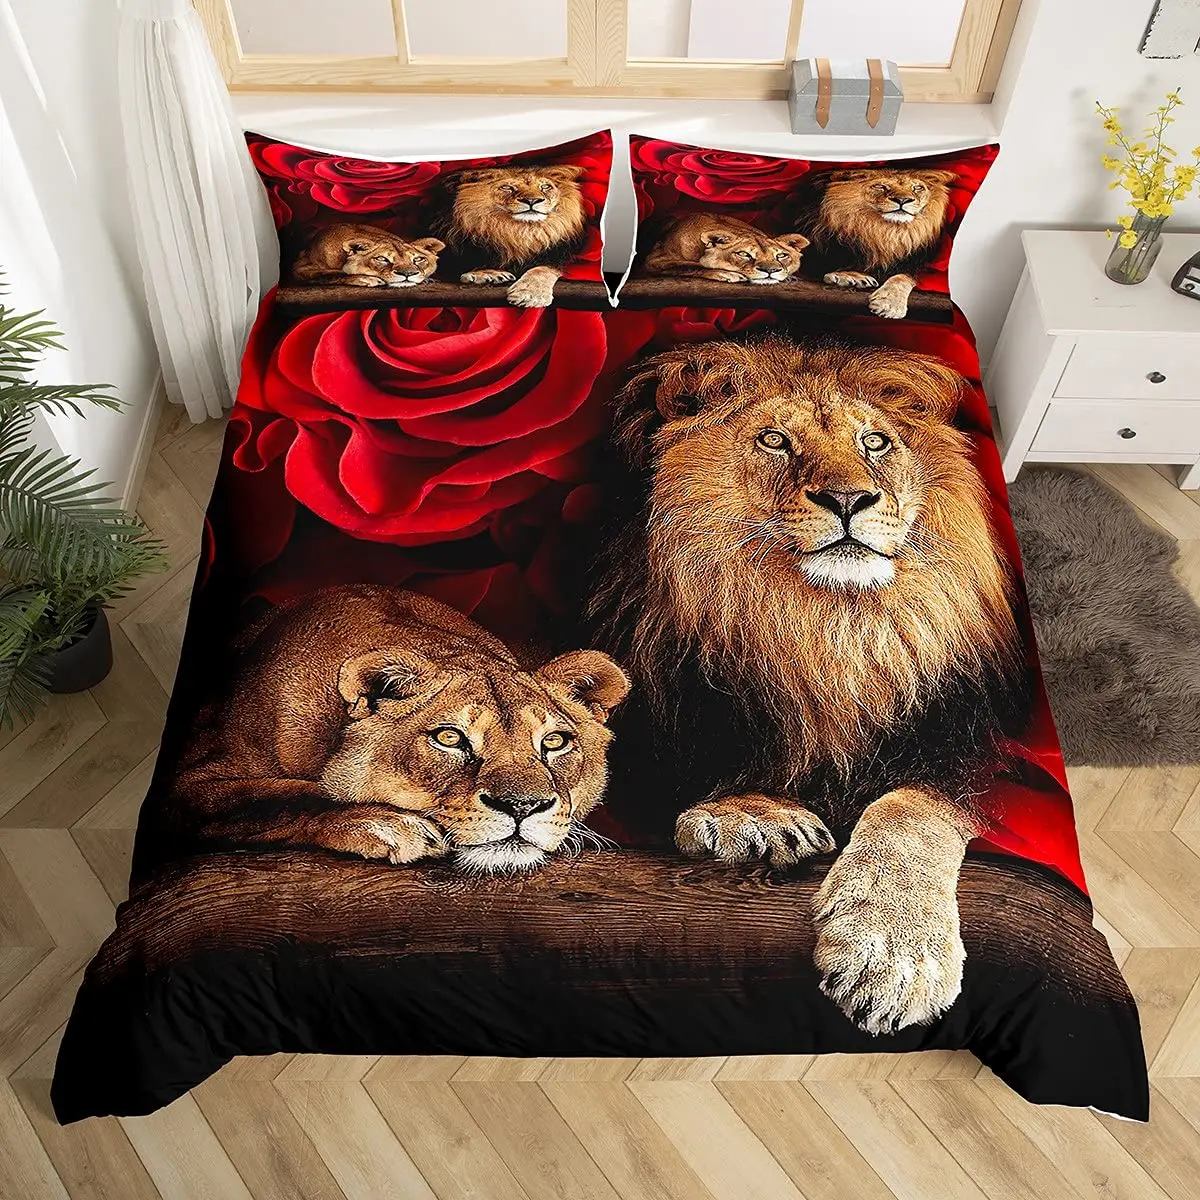 Lion Rose Duvet Cover Set Full Size,Animal Floral Comforter Cover Nature Theme Design Bedding Set,Modern Brown Lion Quilt Cover